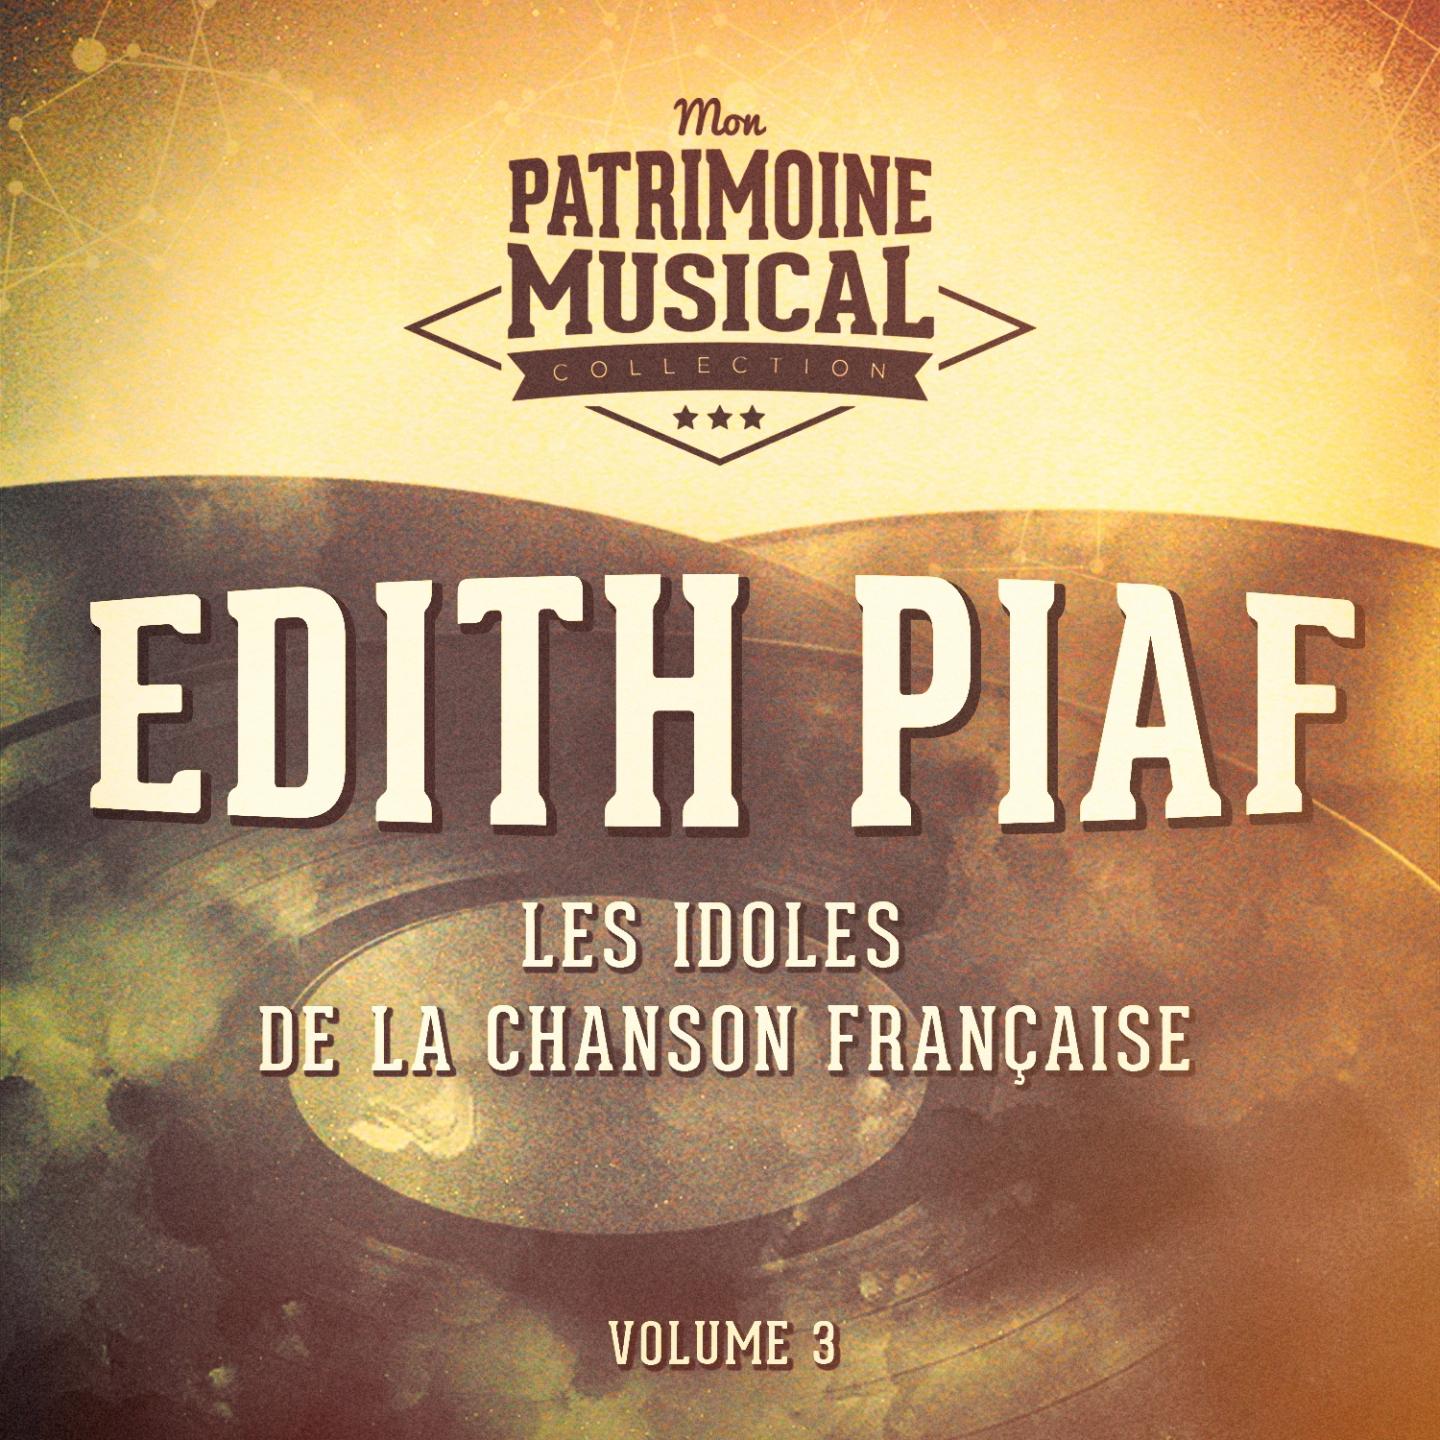 Les idoles de la chanson française : Edith Piaf, Vol. 3